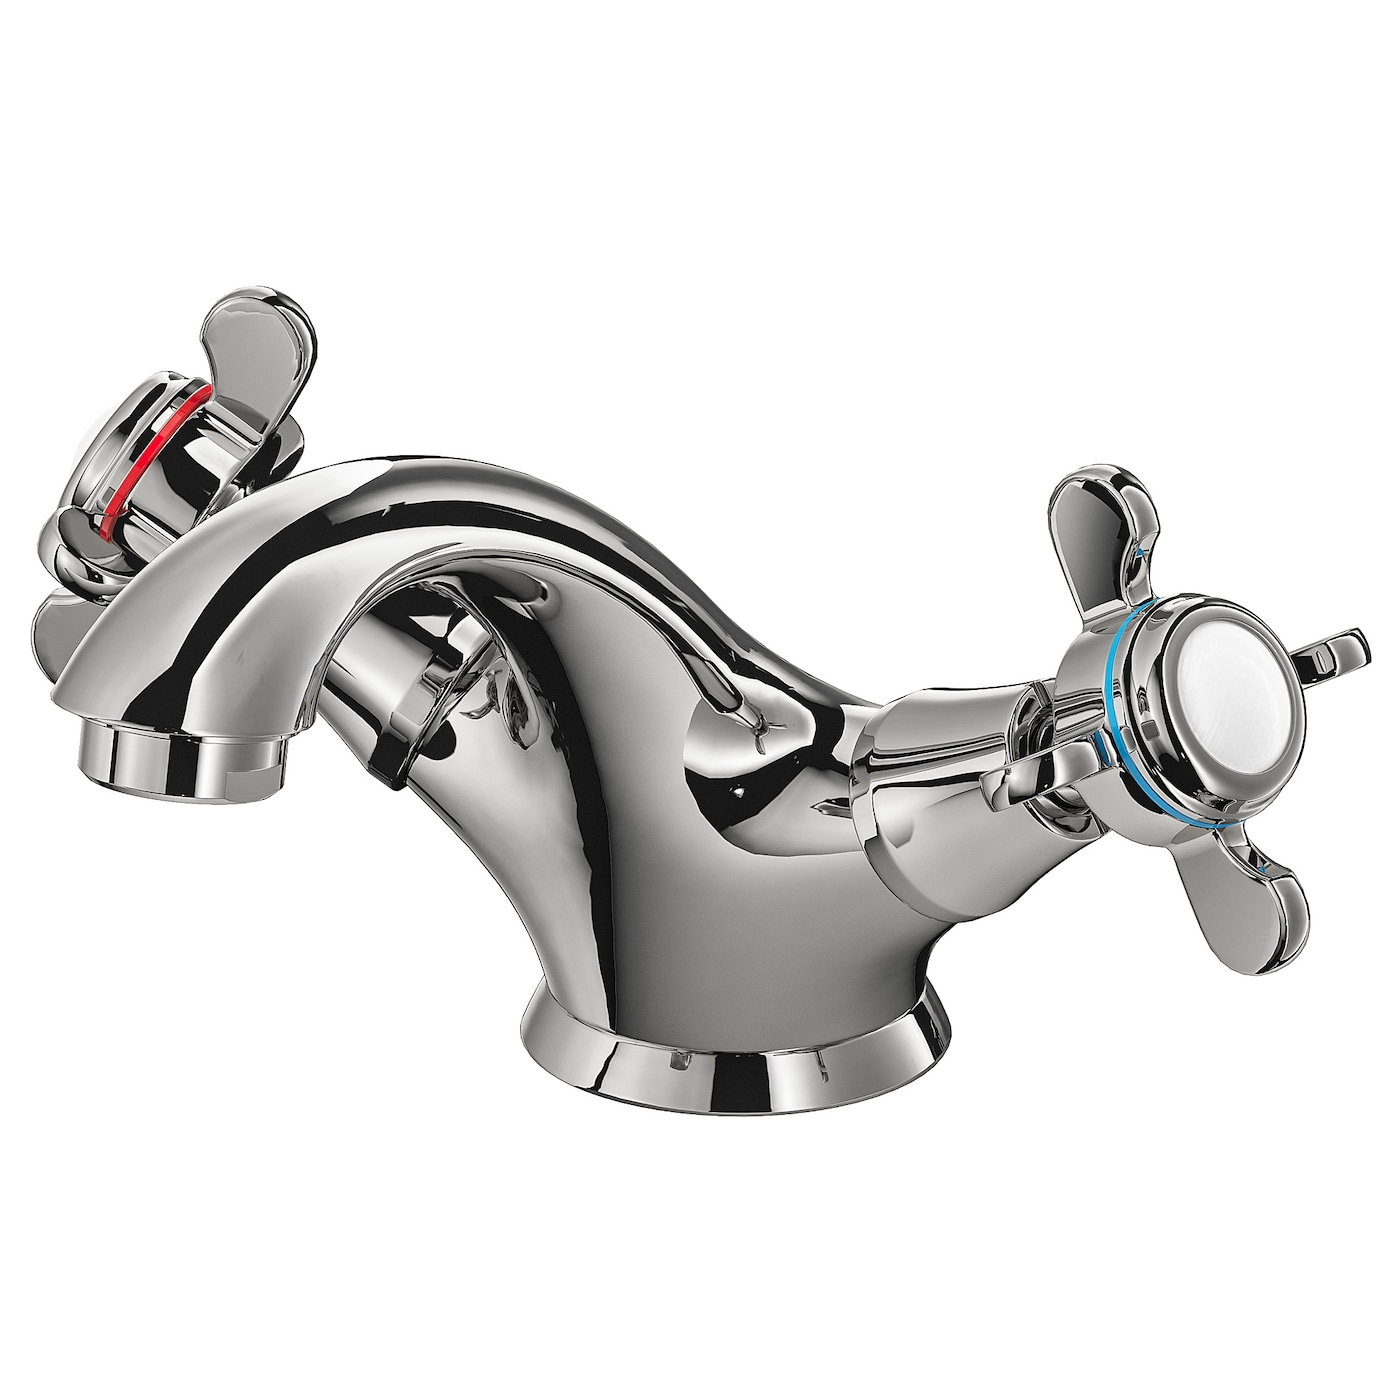 RUNSKÄR wash-basin mixer tap with strainer chrome-plated - IKEA